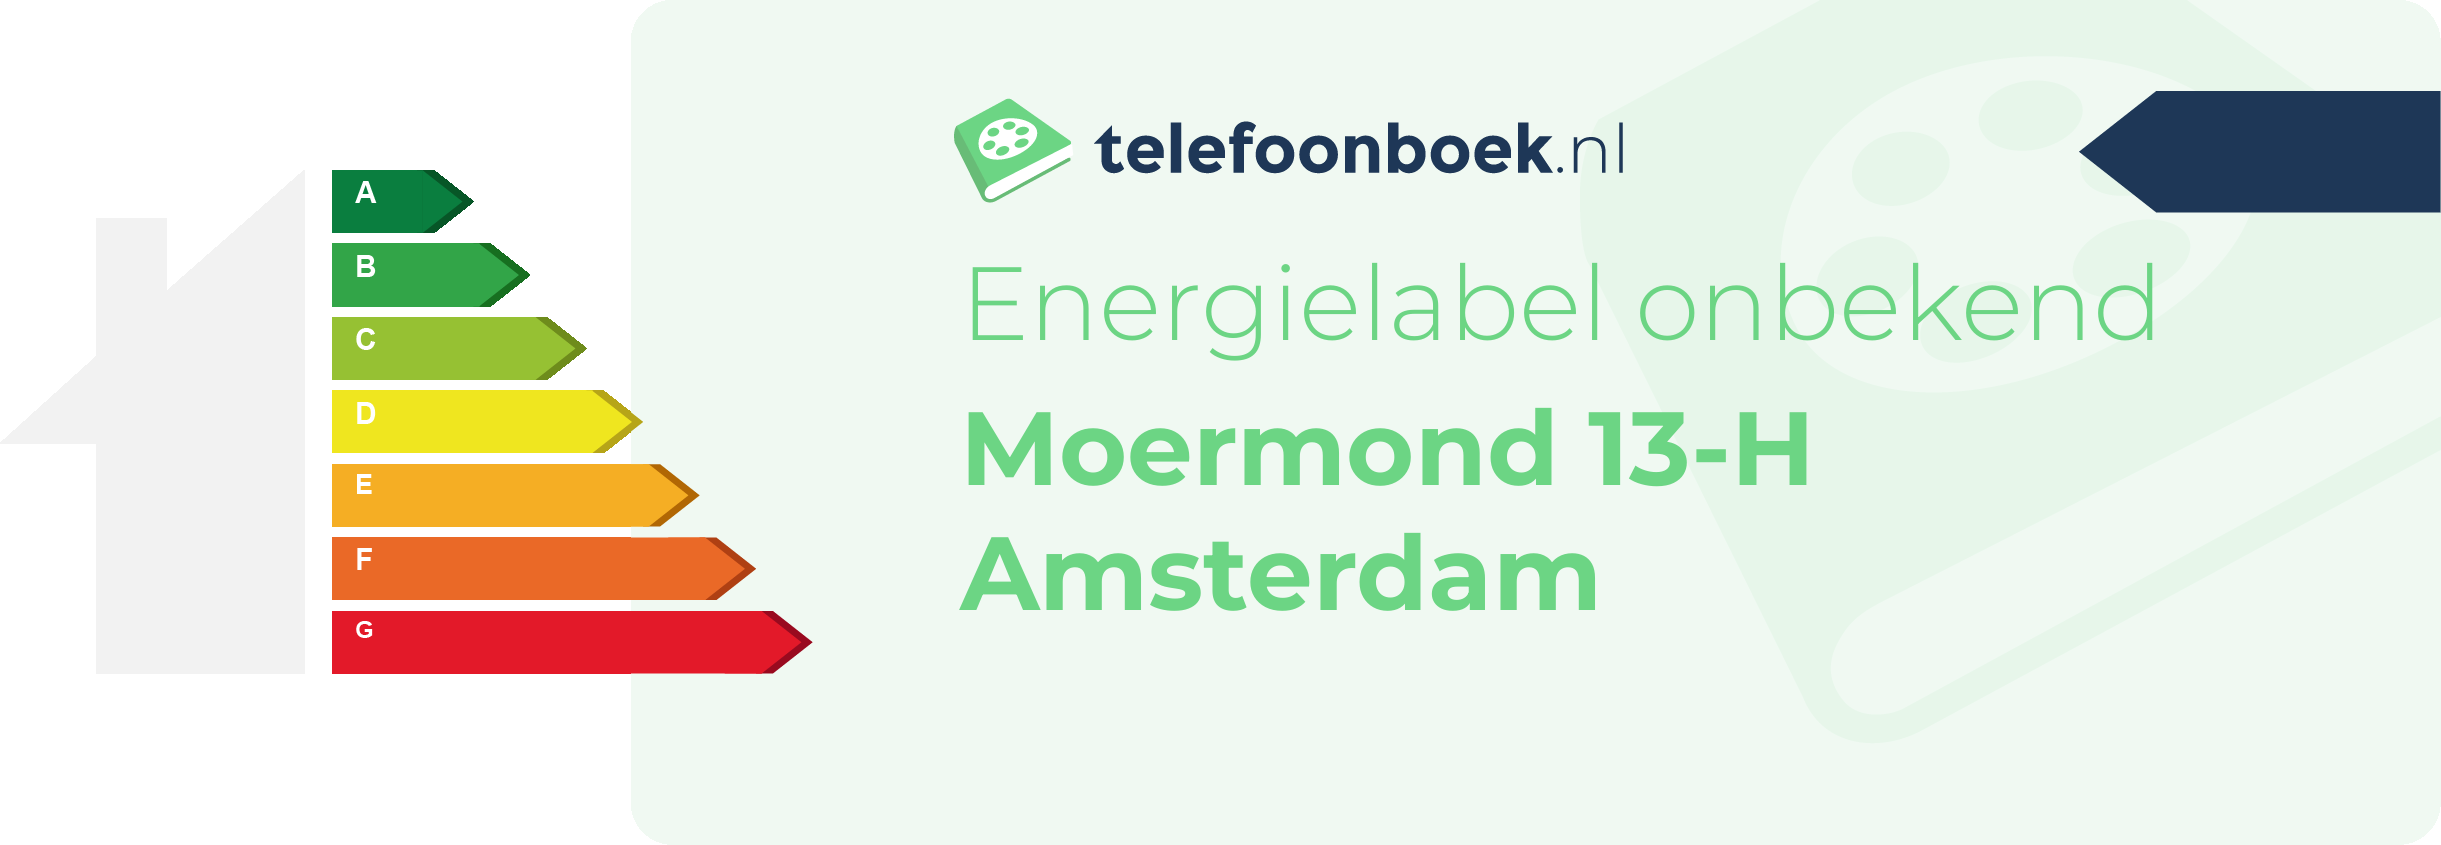 Energielabel Moermond 13-H Amsterdam